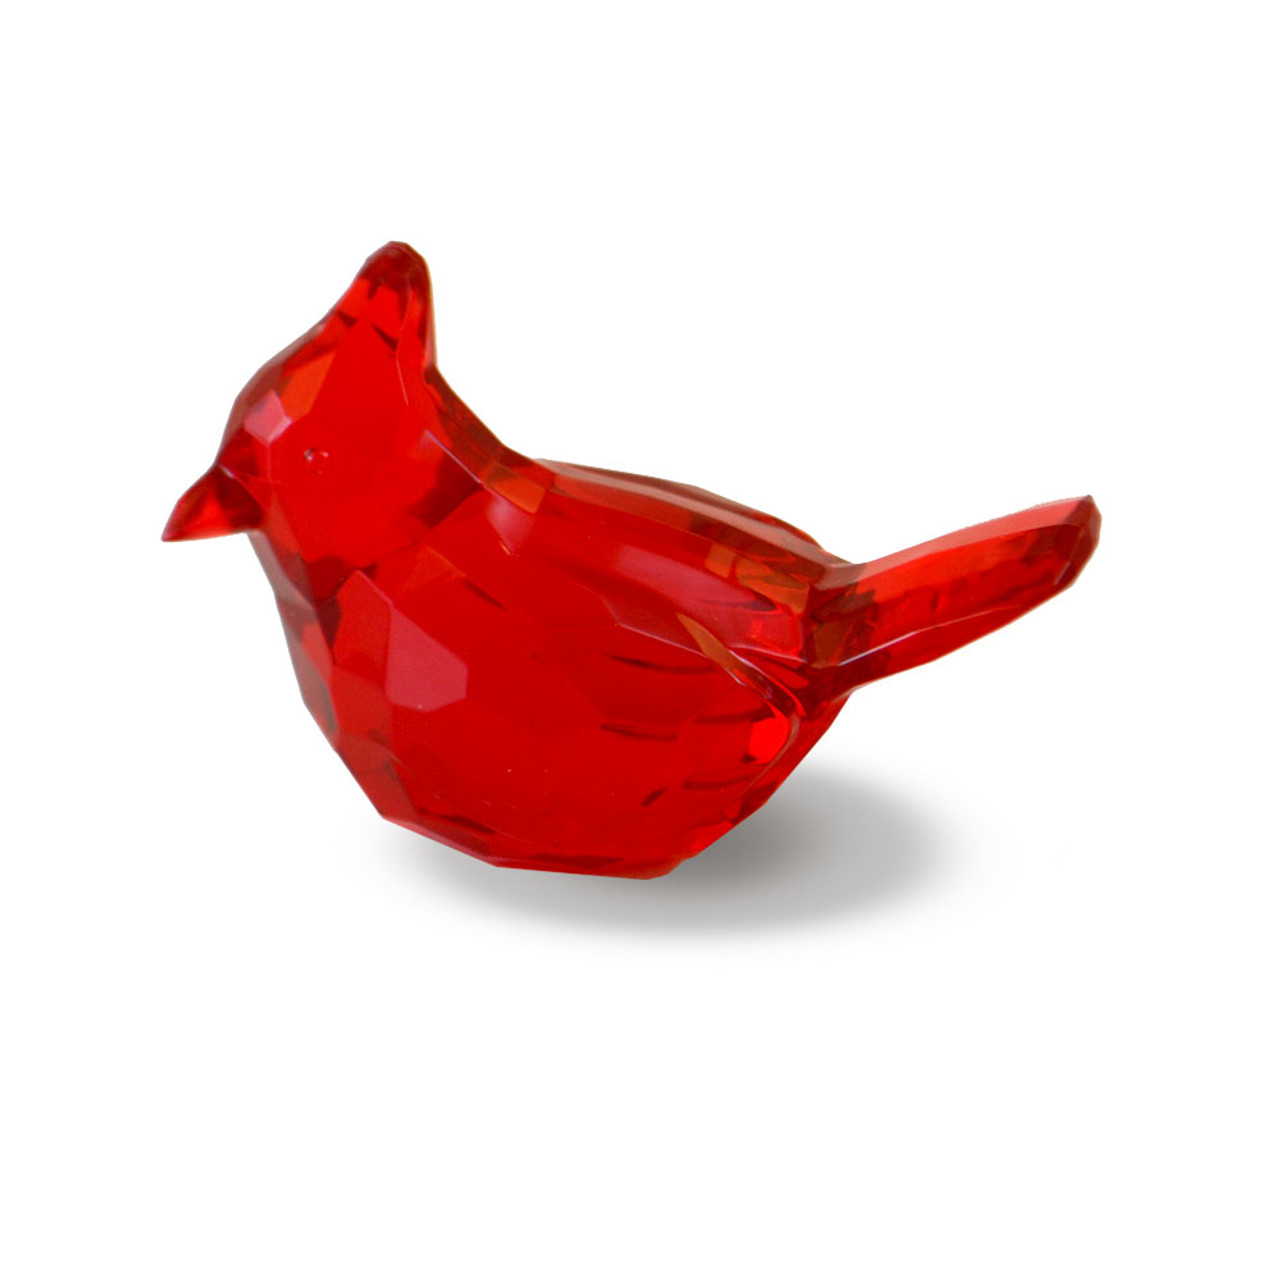 2-1/2"H Acrylic Cardinal figurine